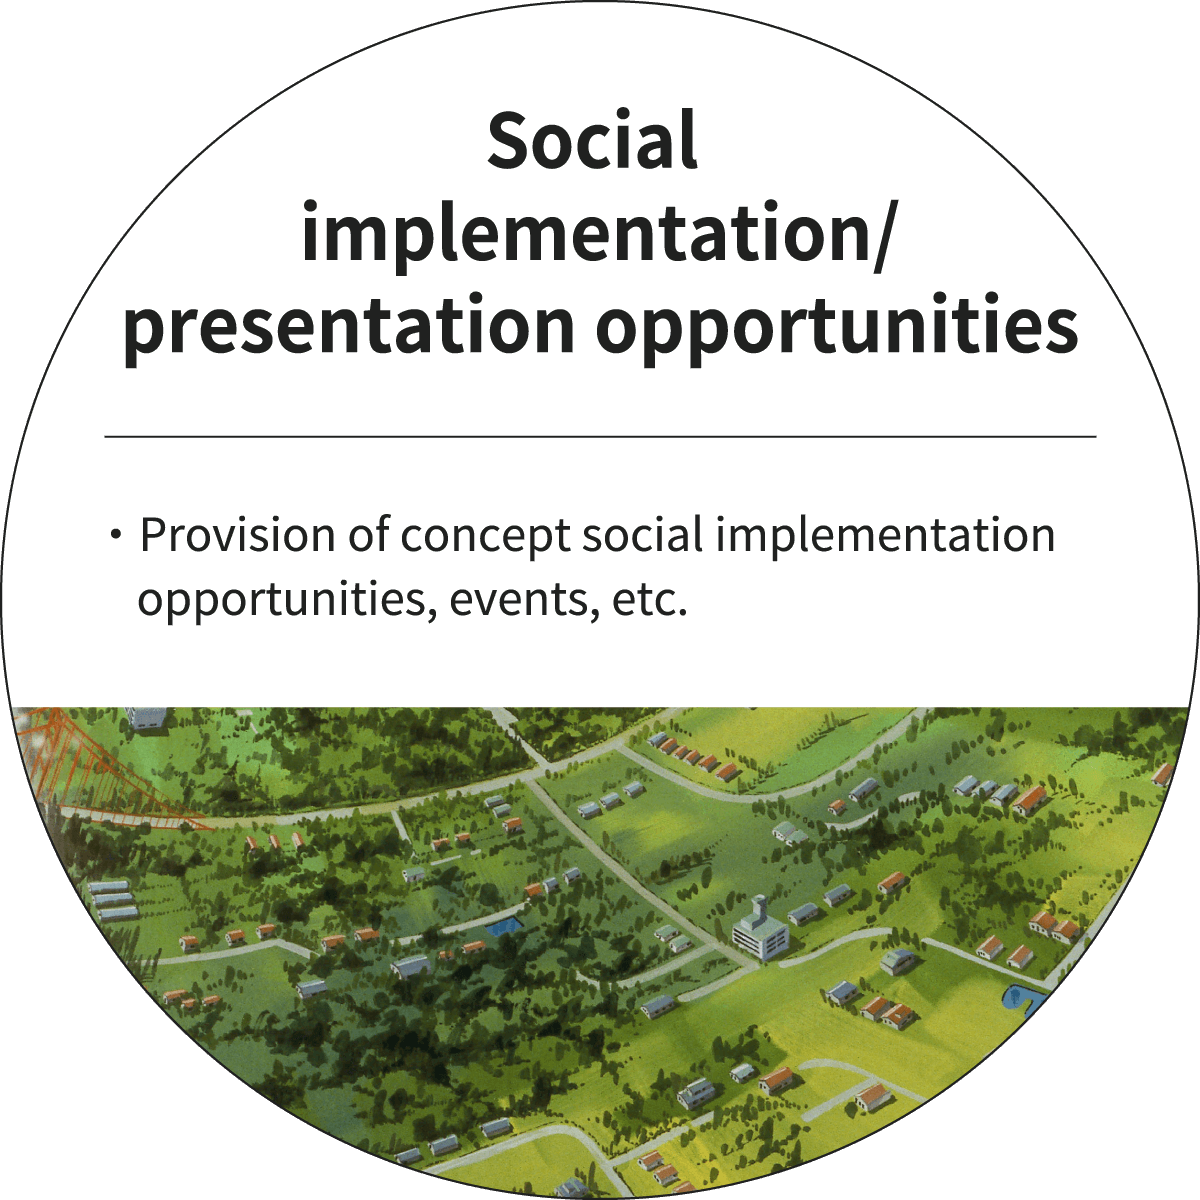 Social implementation/presentation opportunities